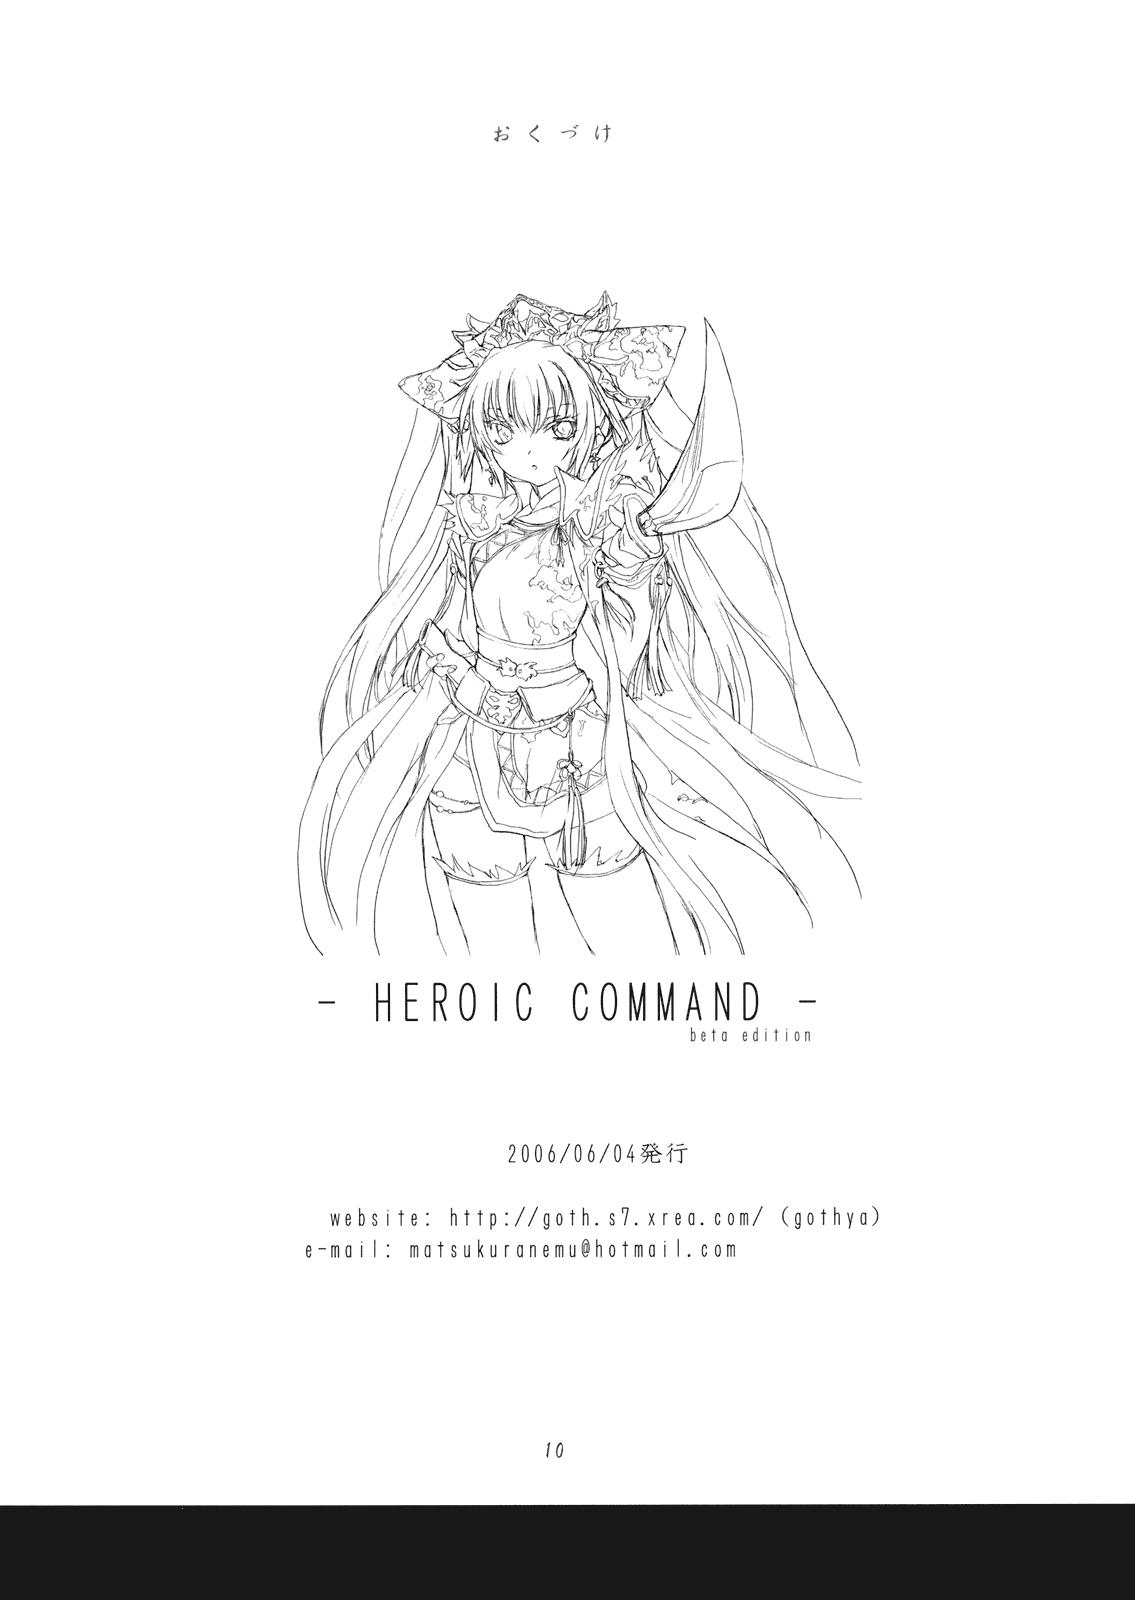 HEROIC COMMAND Beta Edition 10